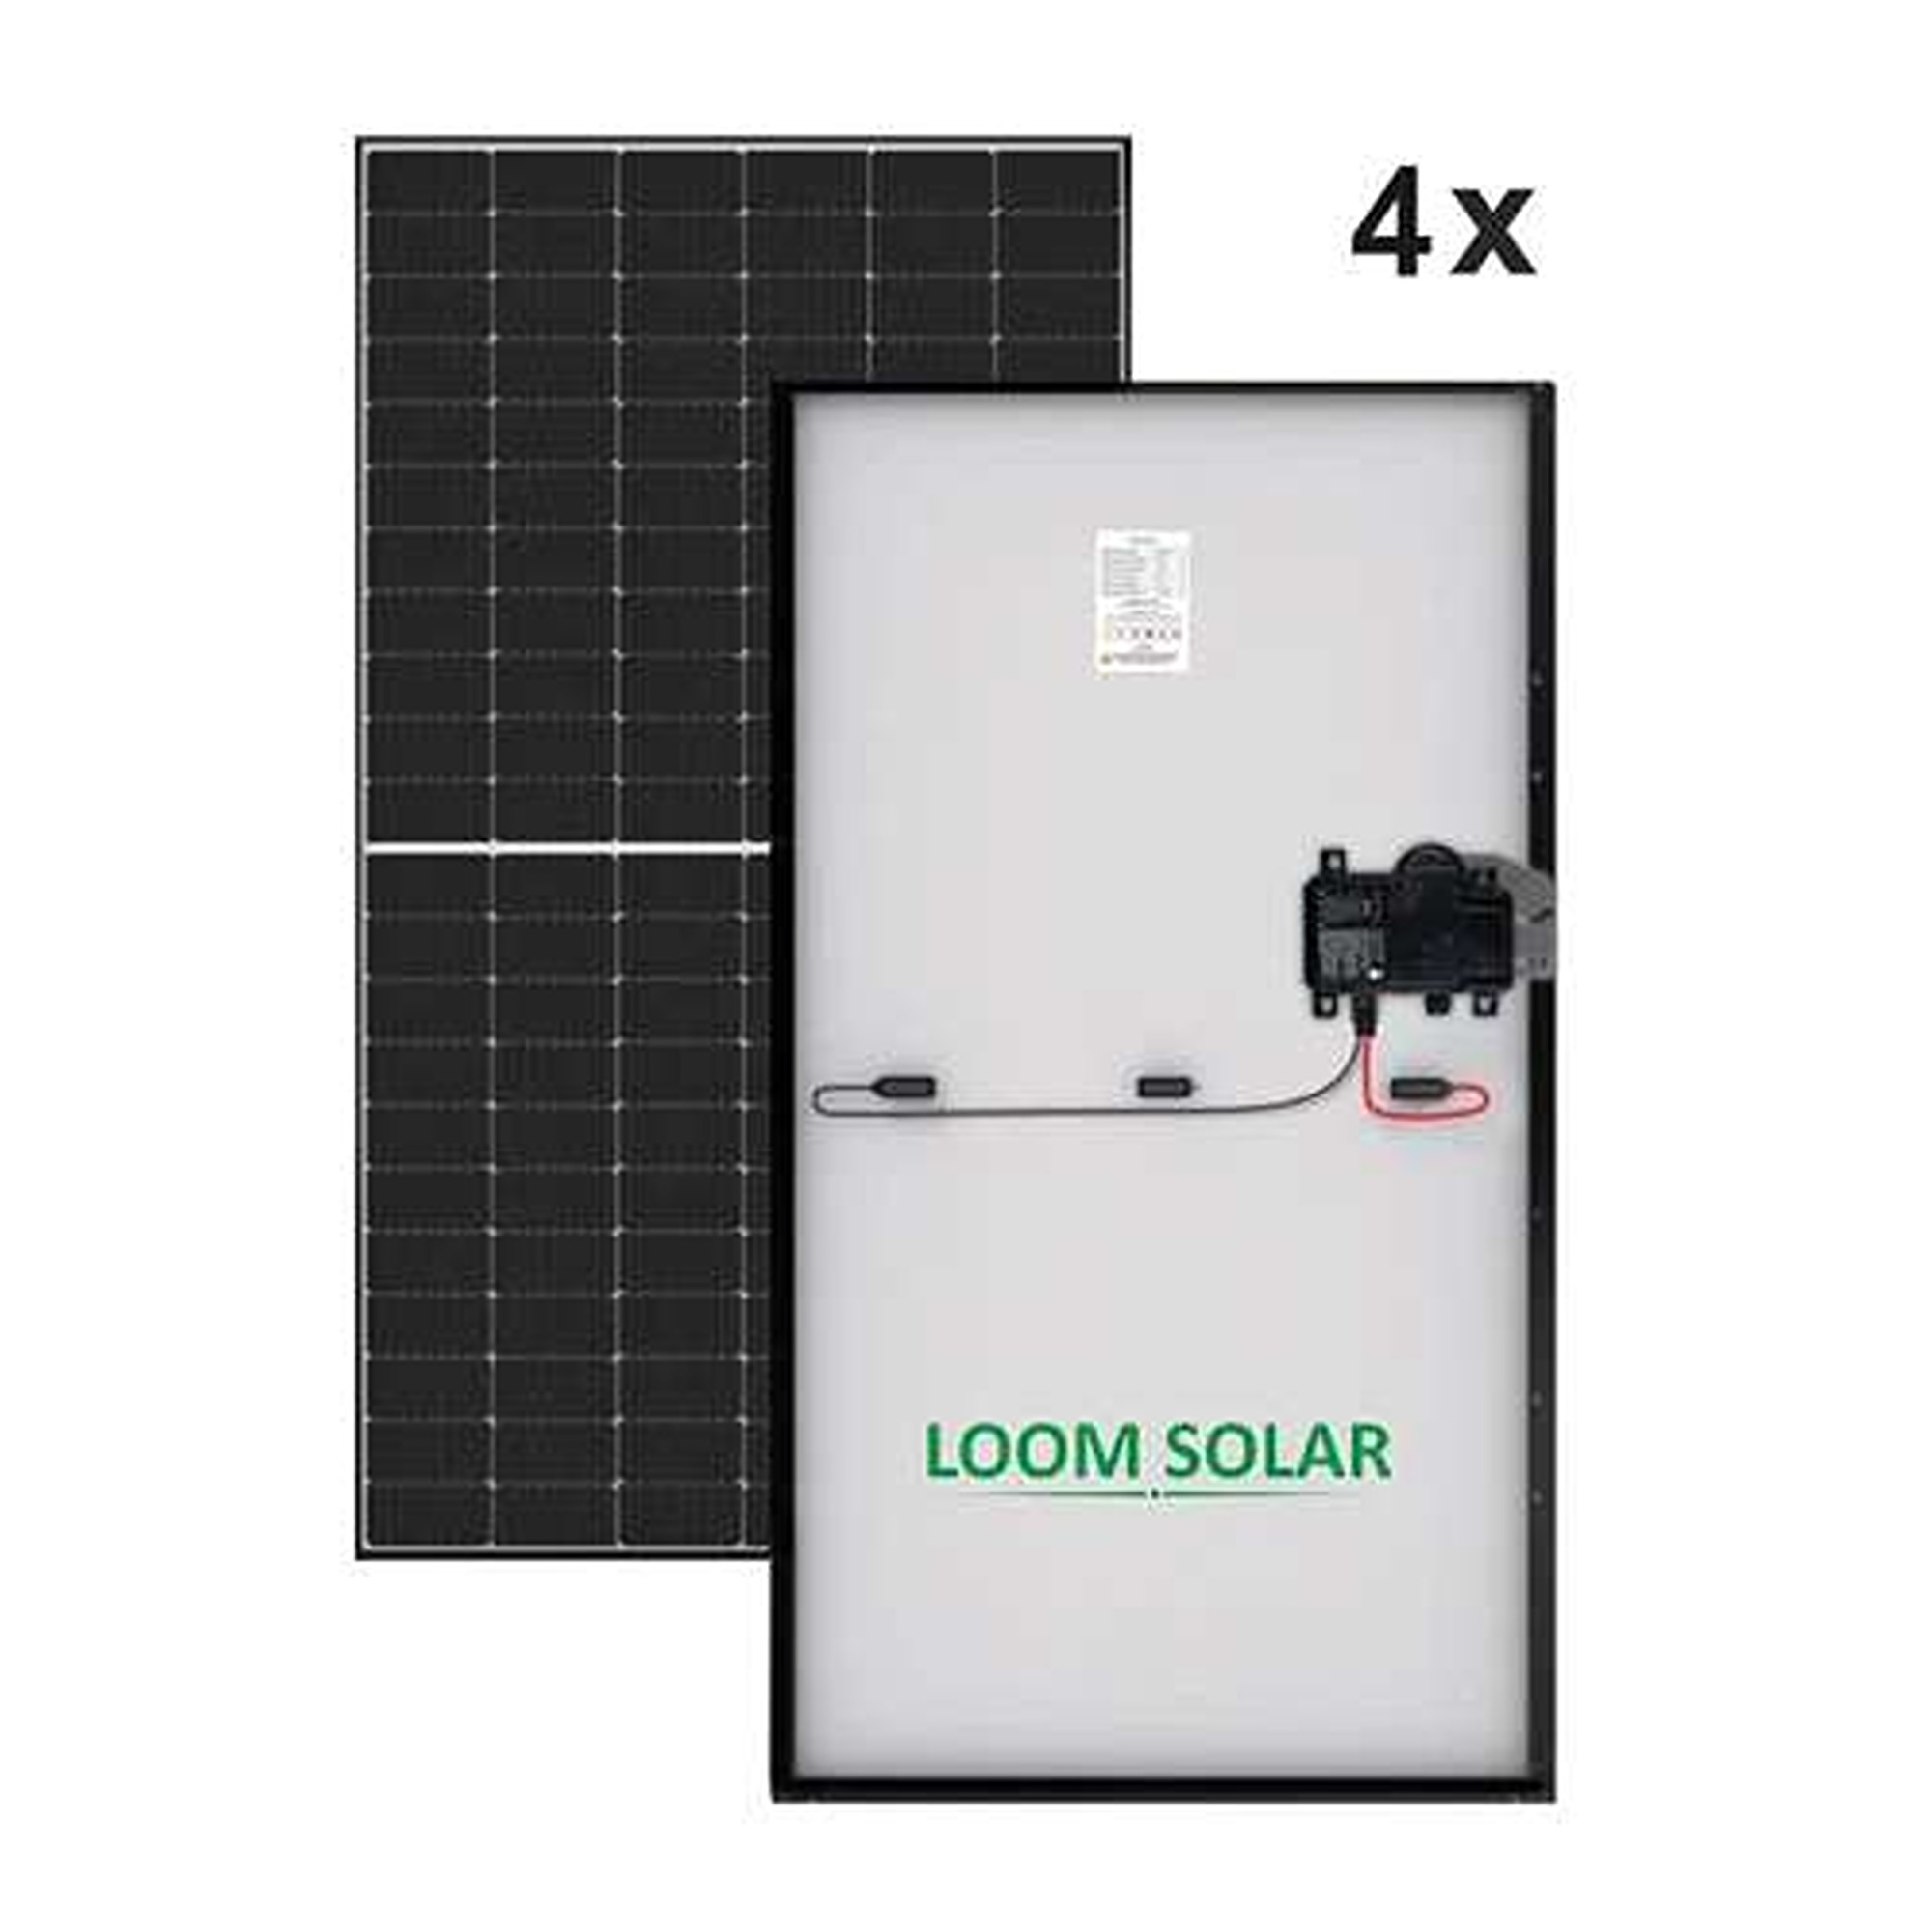 Loom solar 2 kw Grid Connected AC Module